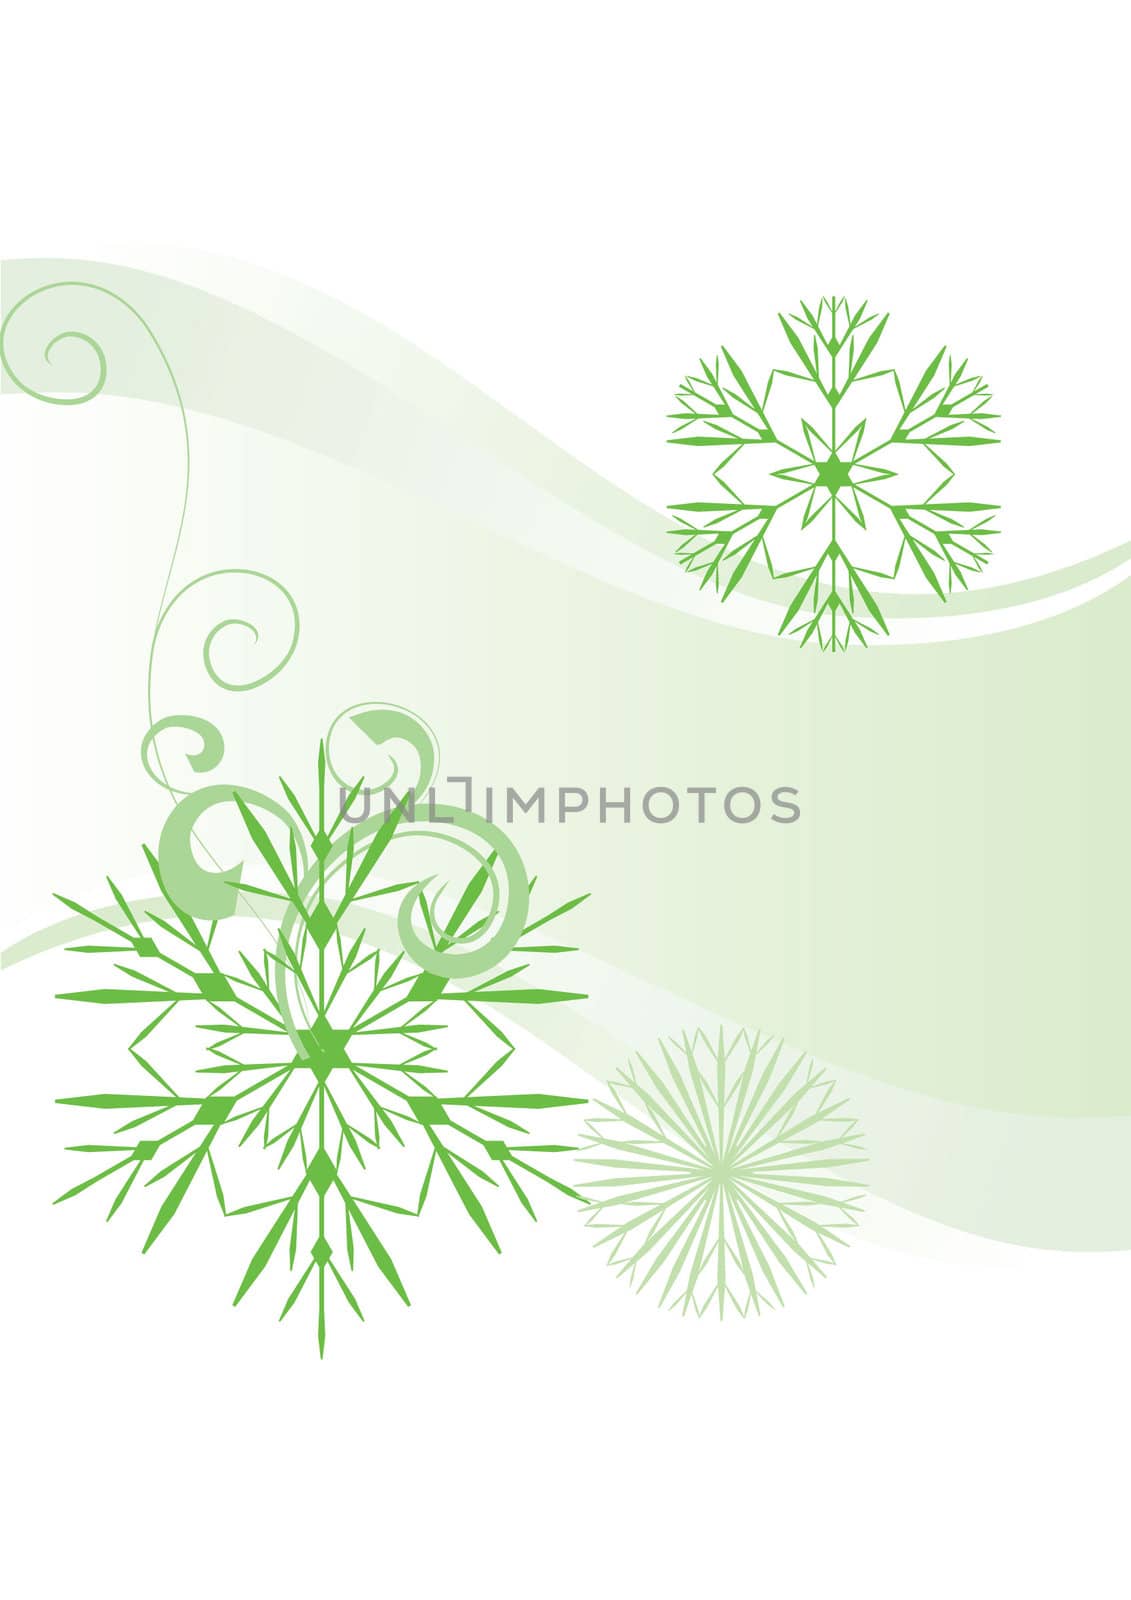 snowflakes abstract vector green backdrop by CherJu